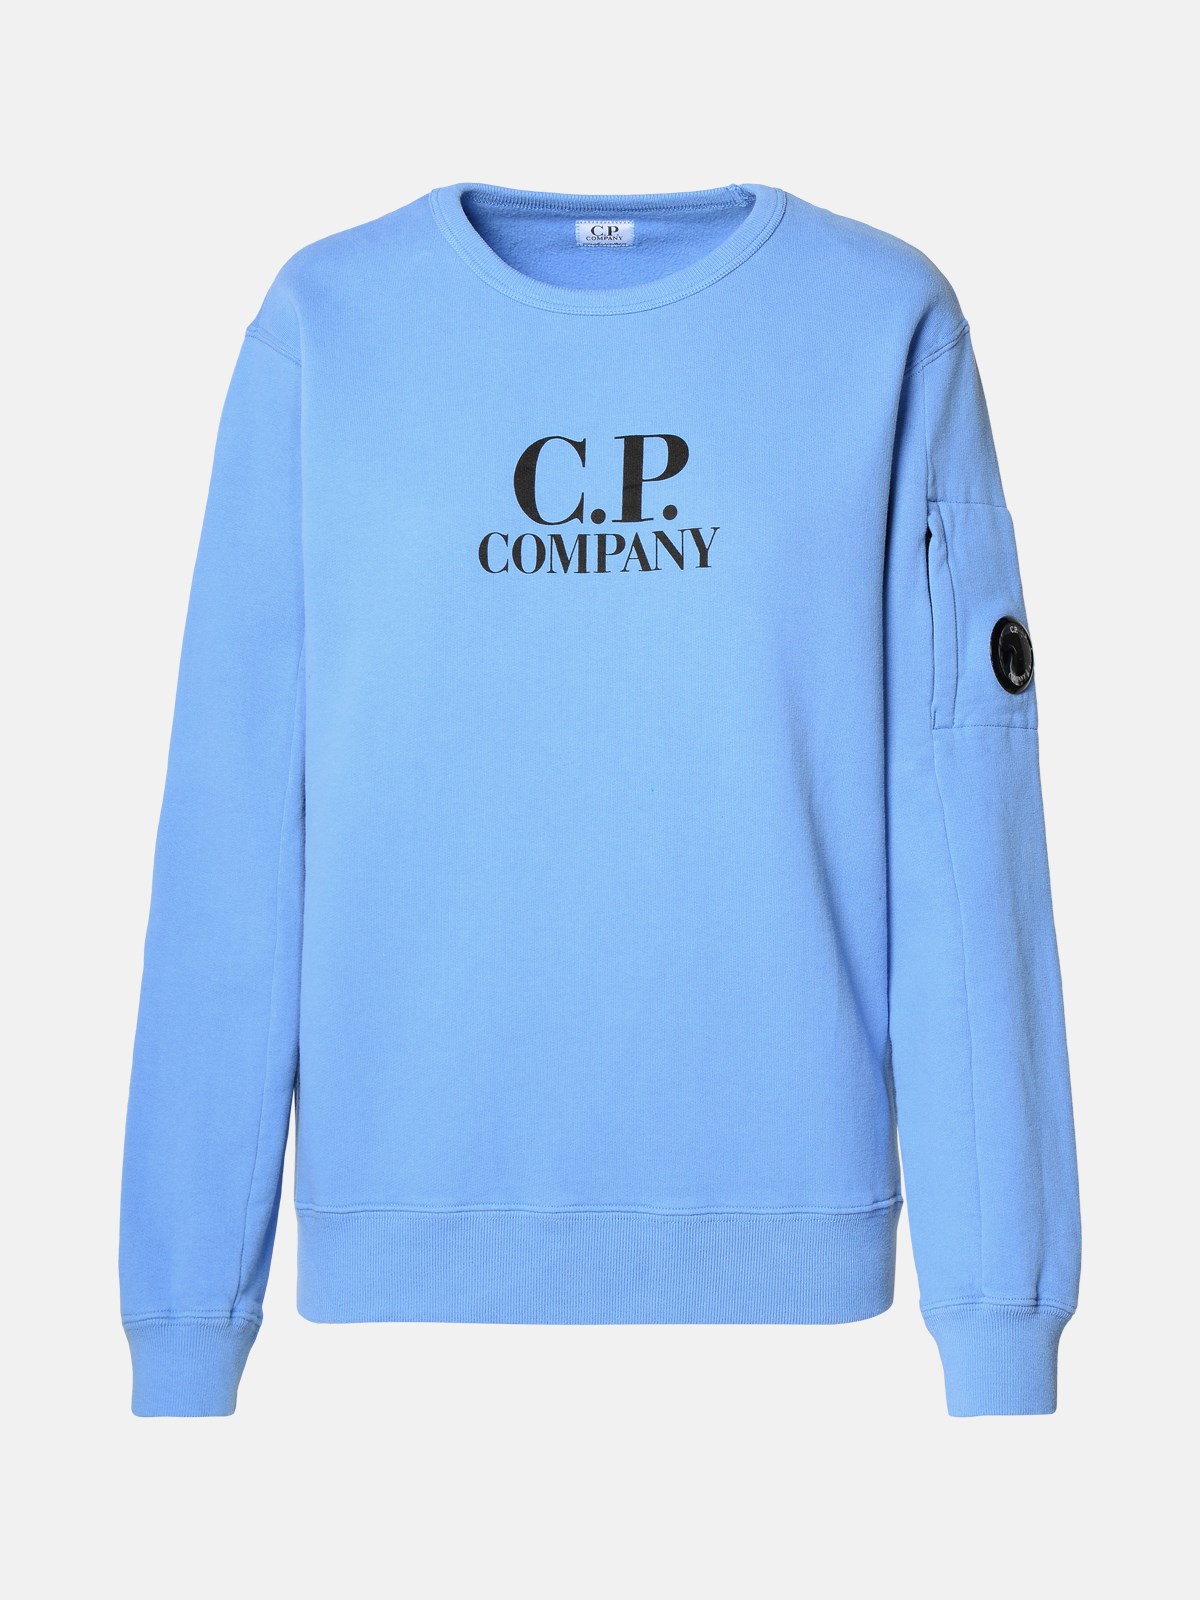 C.p. Company Kids' Light Blue Cotton Sweatshirt